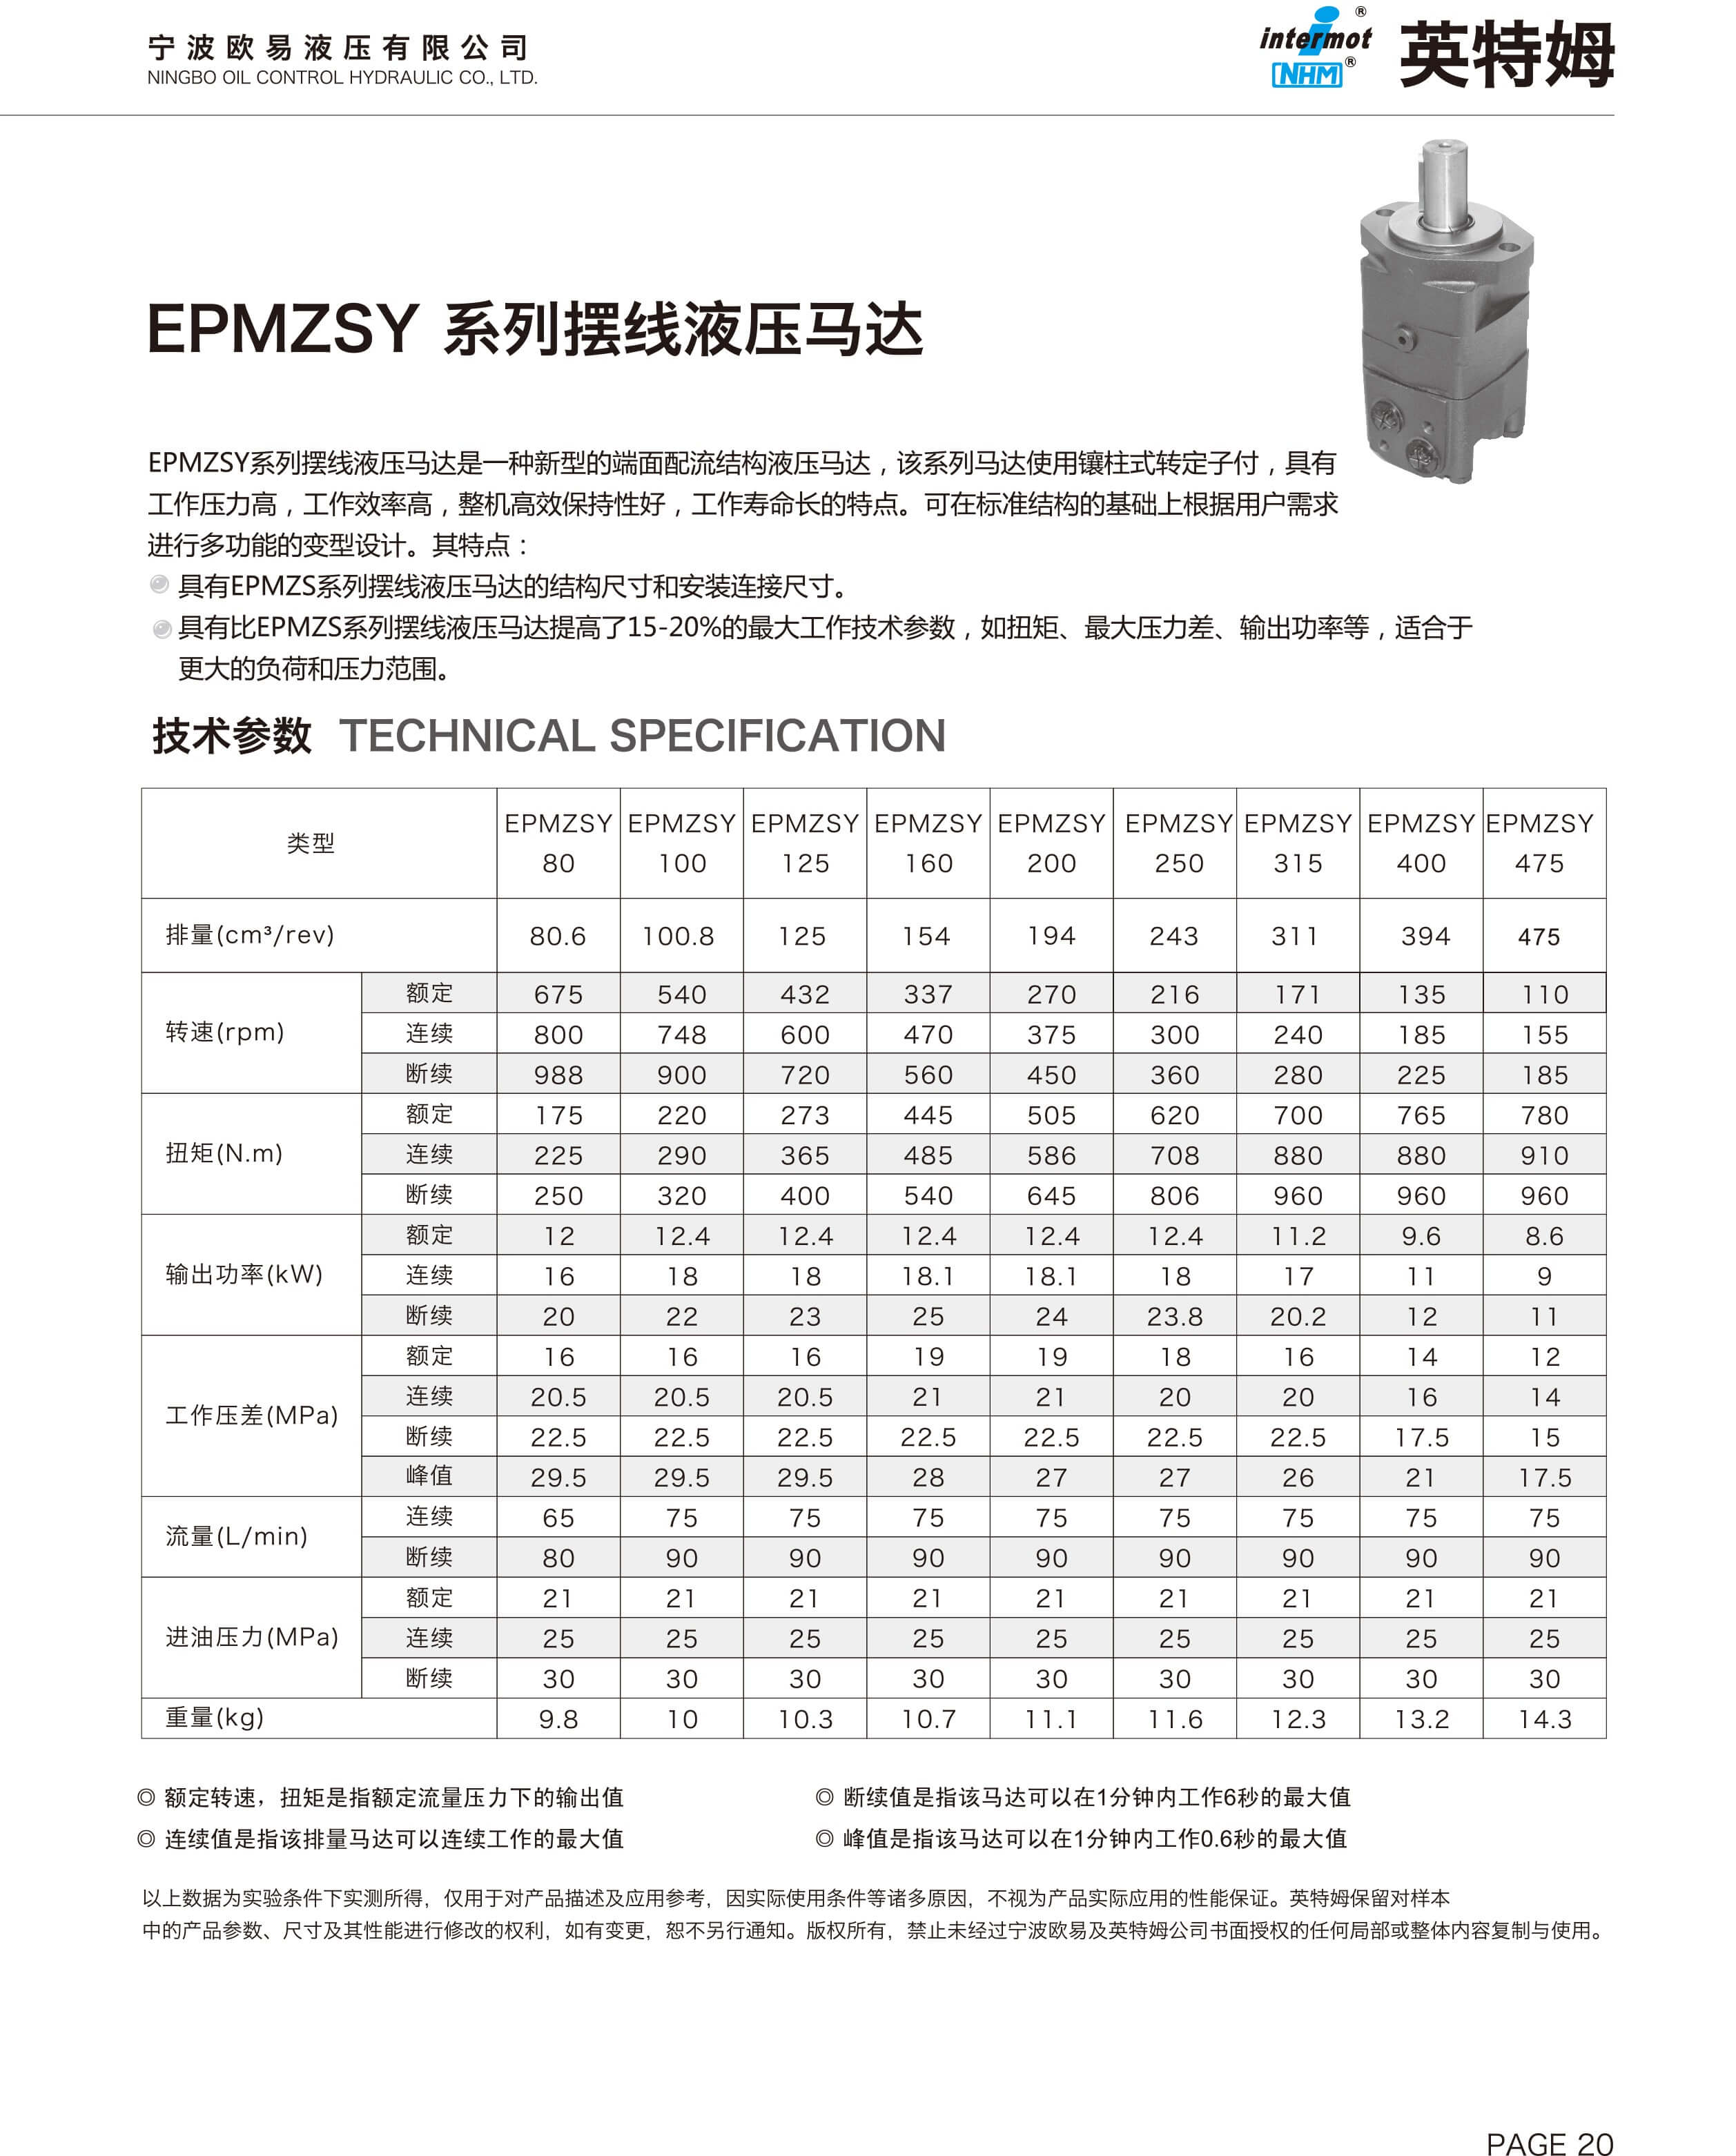 EPMZY-1--32P-7.jpg